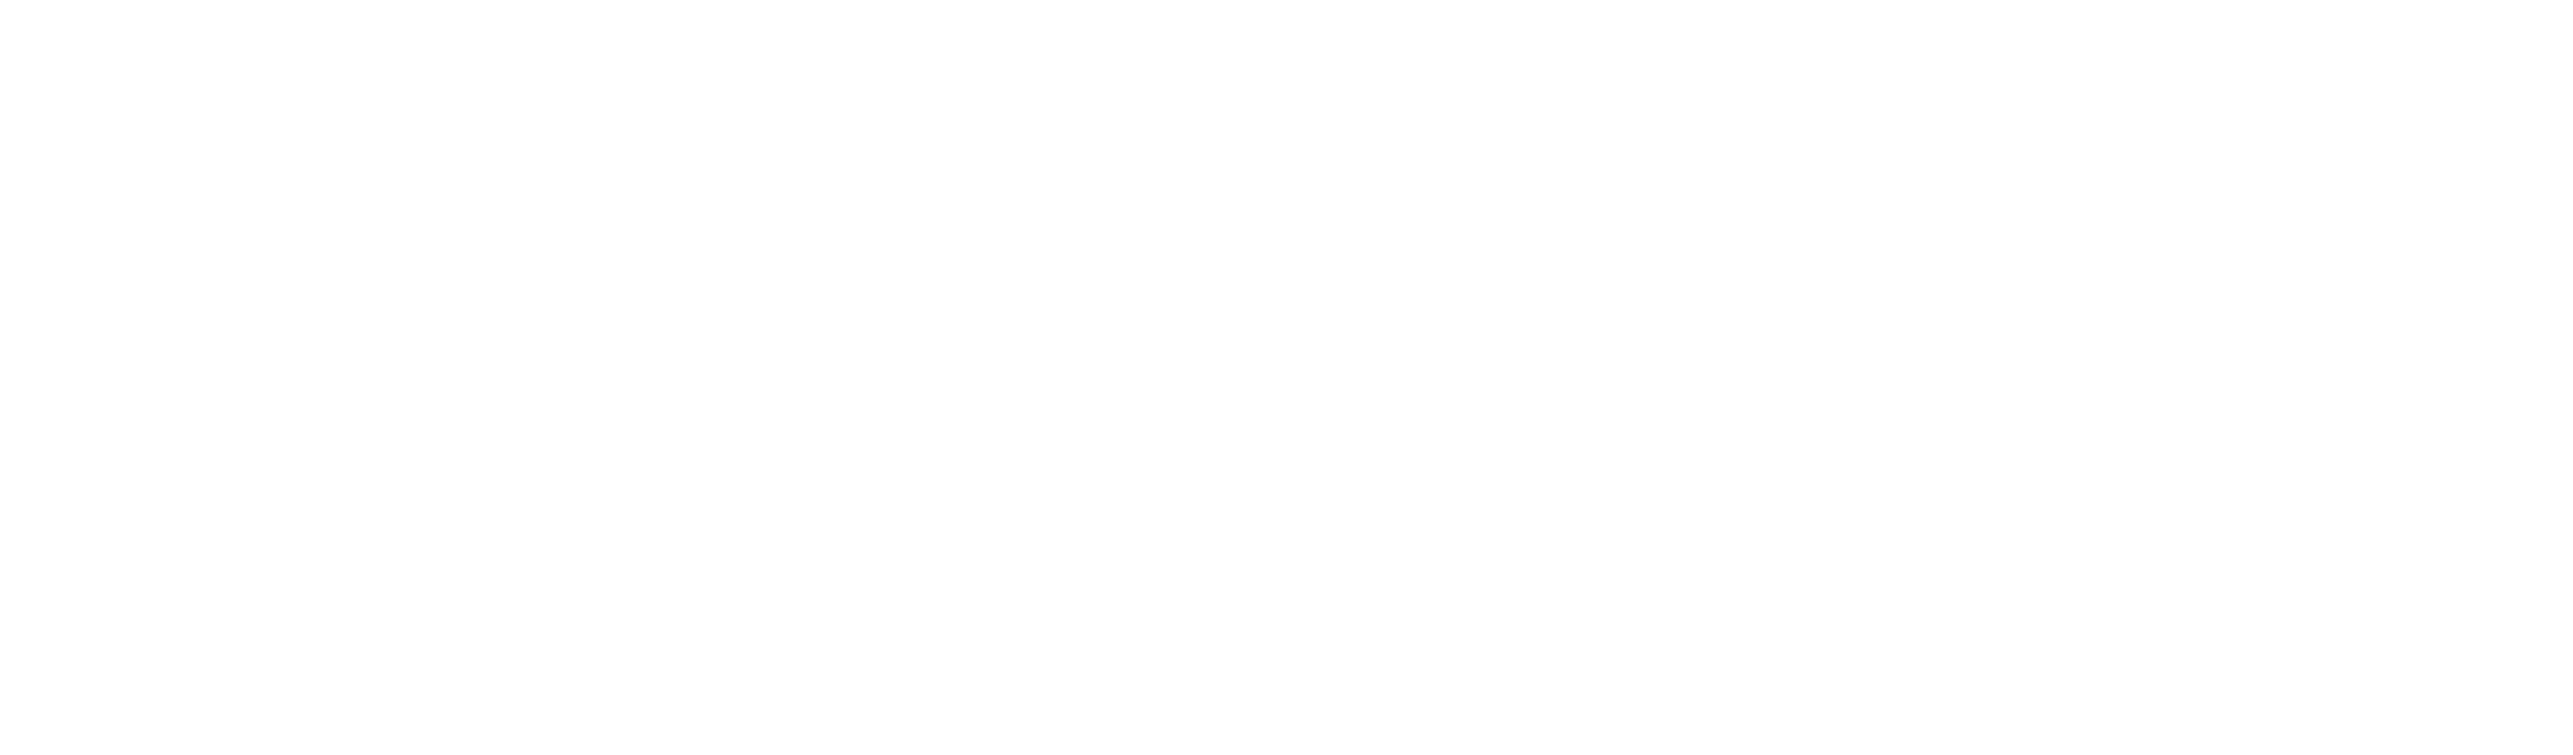 GlobalDentalPro